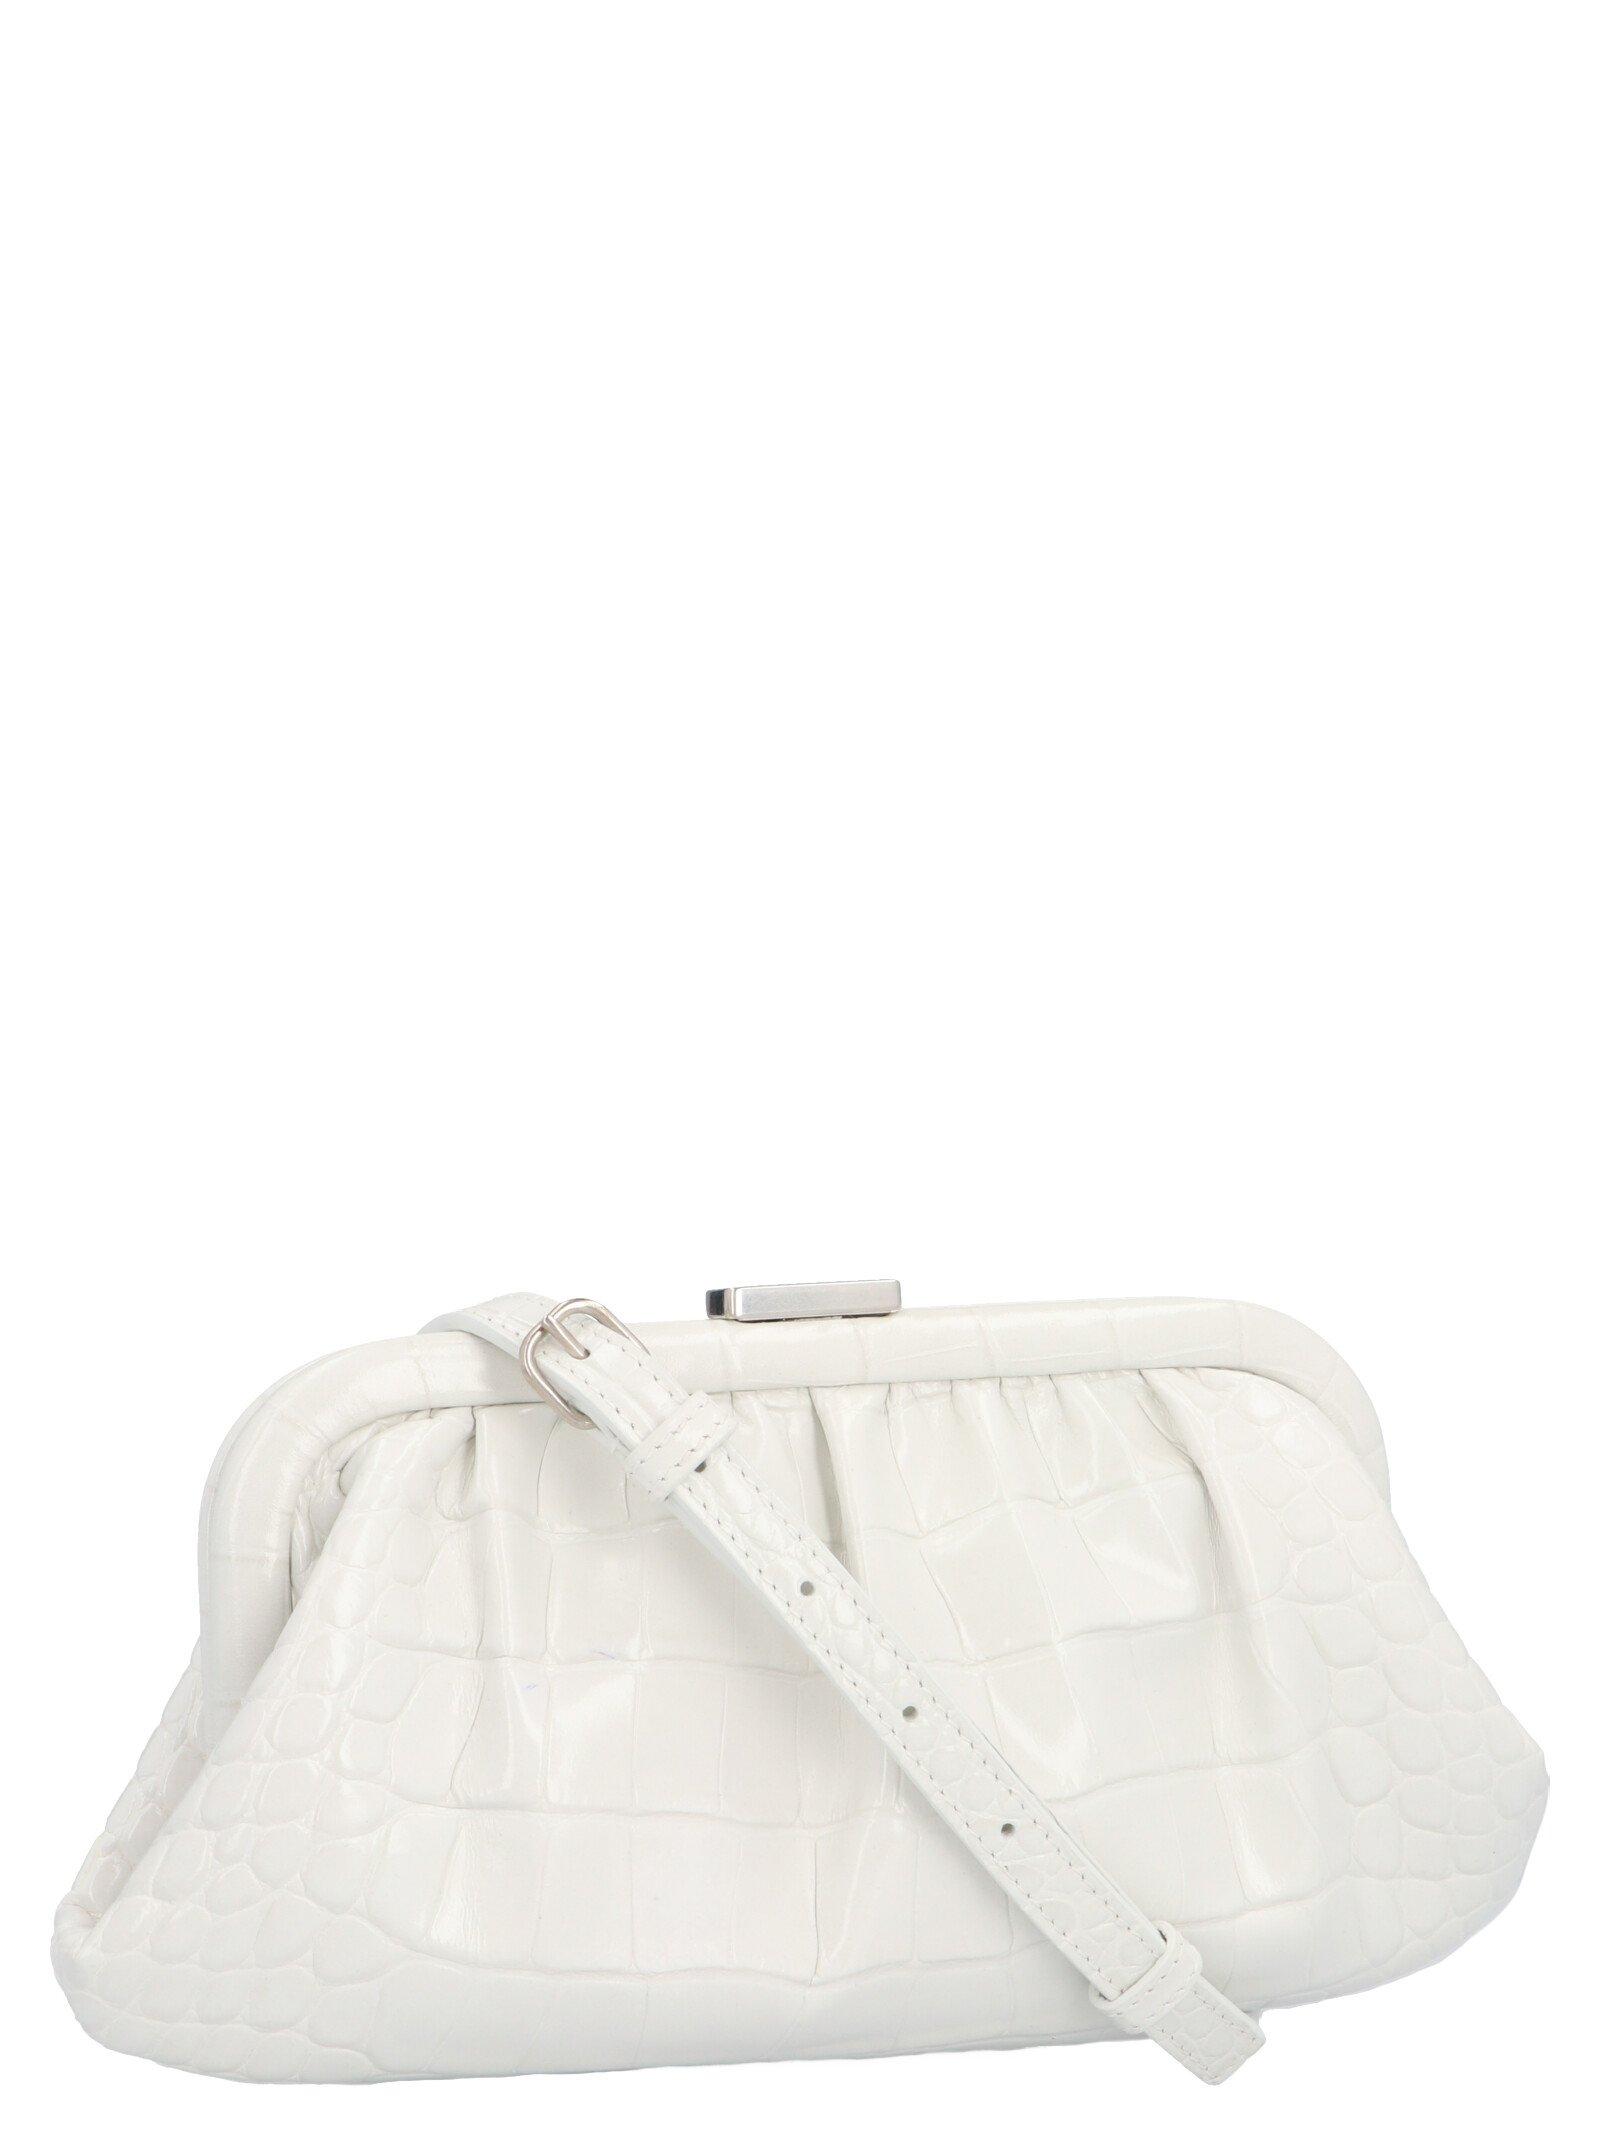 Balenciaga Leather Cloud Xs Strap Clutch Bag in White - Lyst